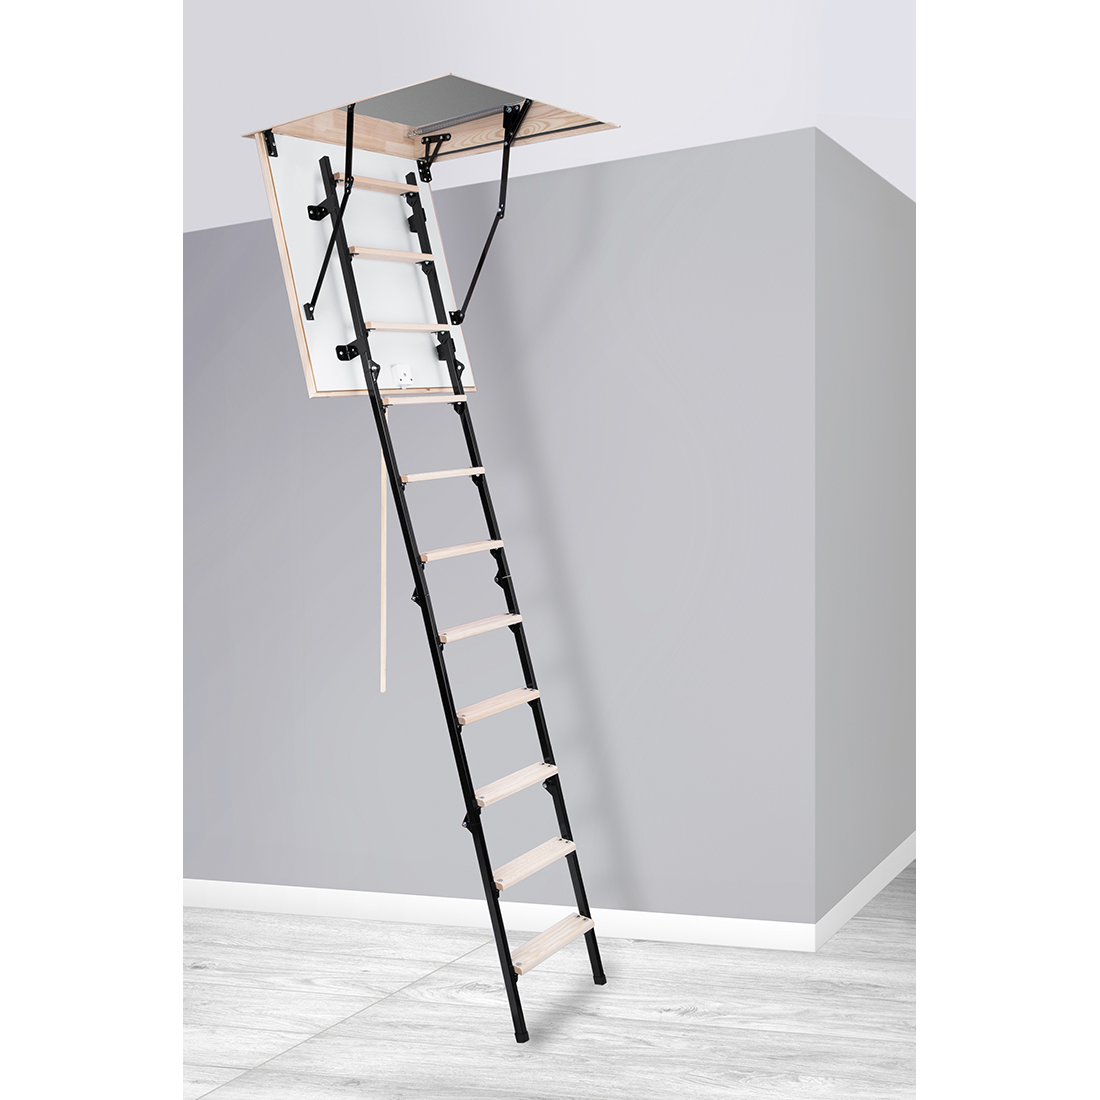 UNI Metal-Wooden Attic Ladder 31.5" x 23.5" - Up to 8.5 feet